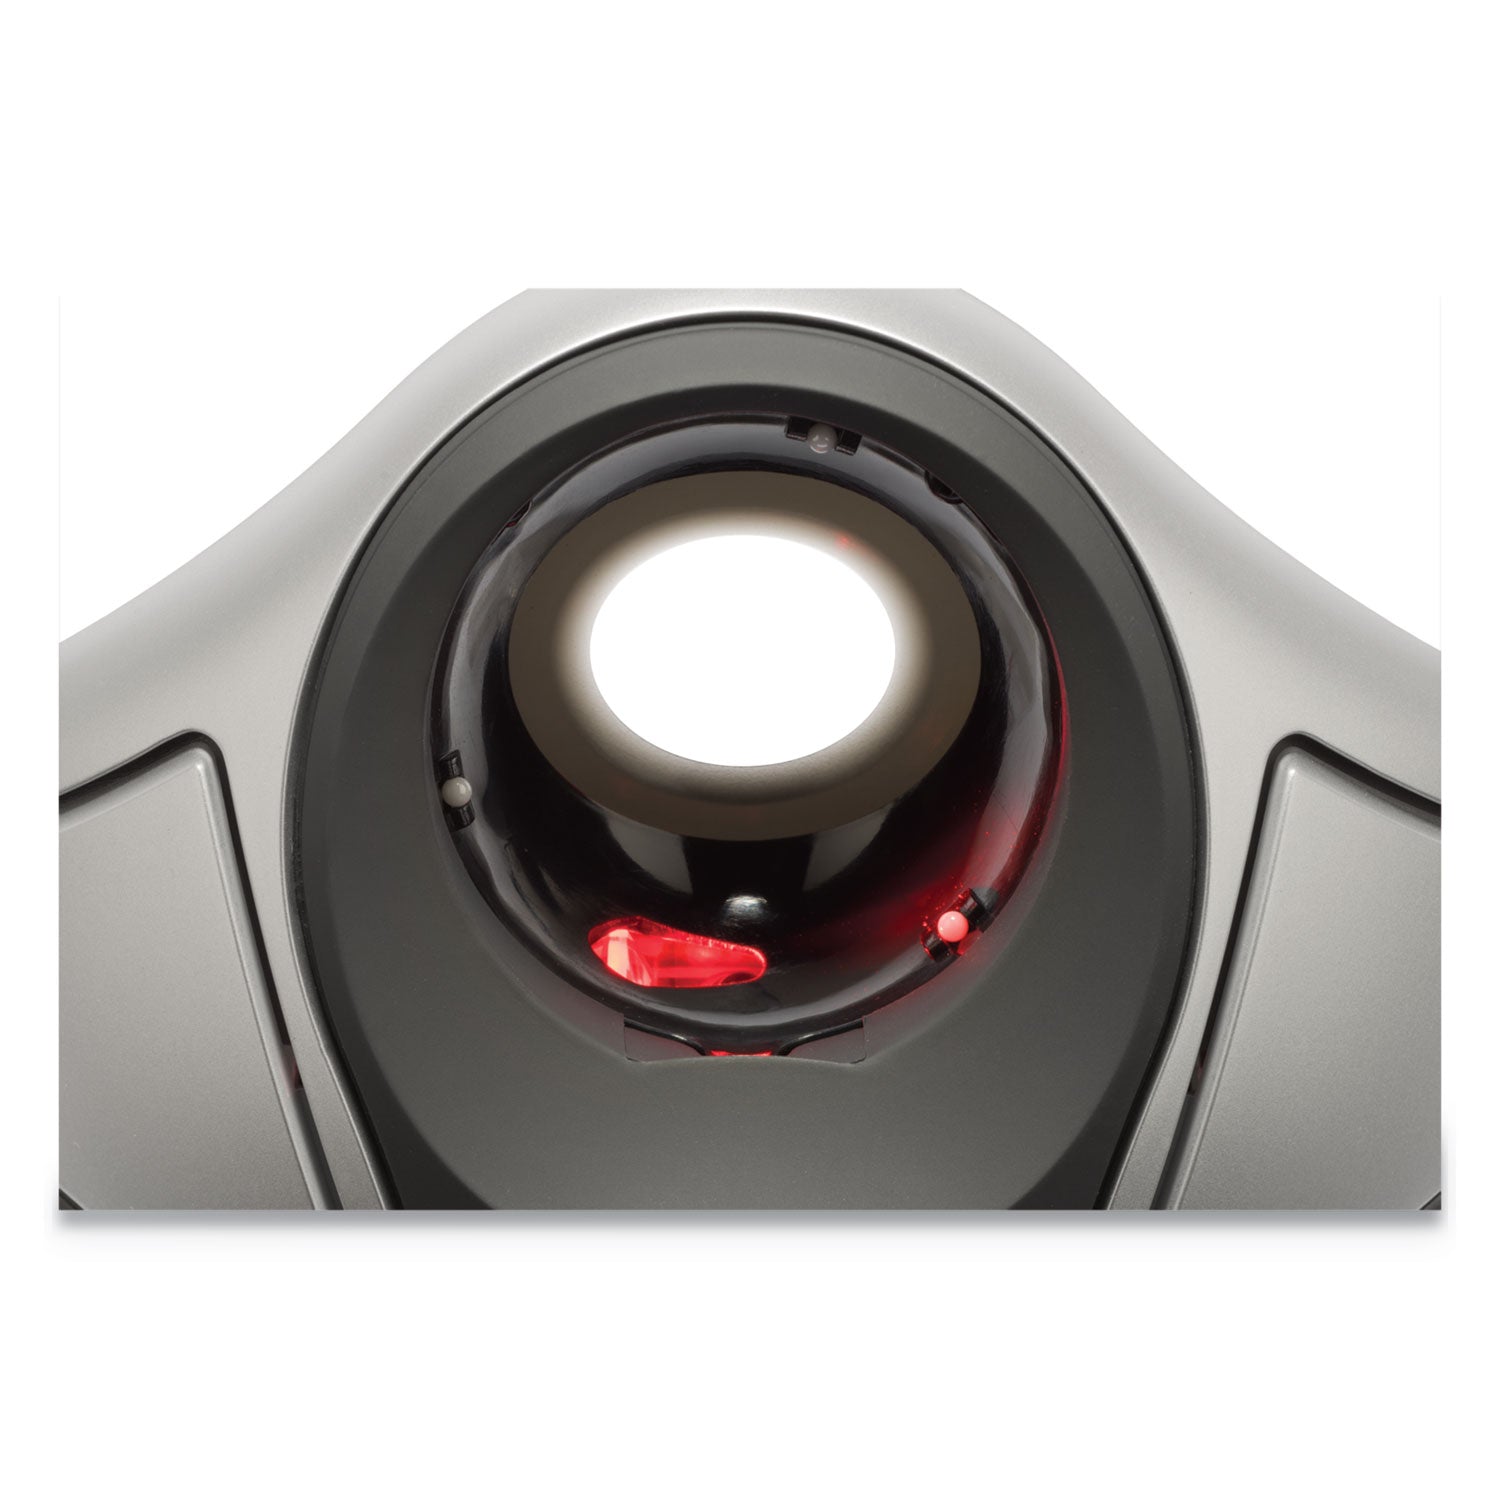 Orbit Optical Trackball Mouse, USB 2.0, Left/Right Hand Use, Black/Silver - 